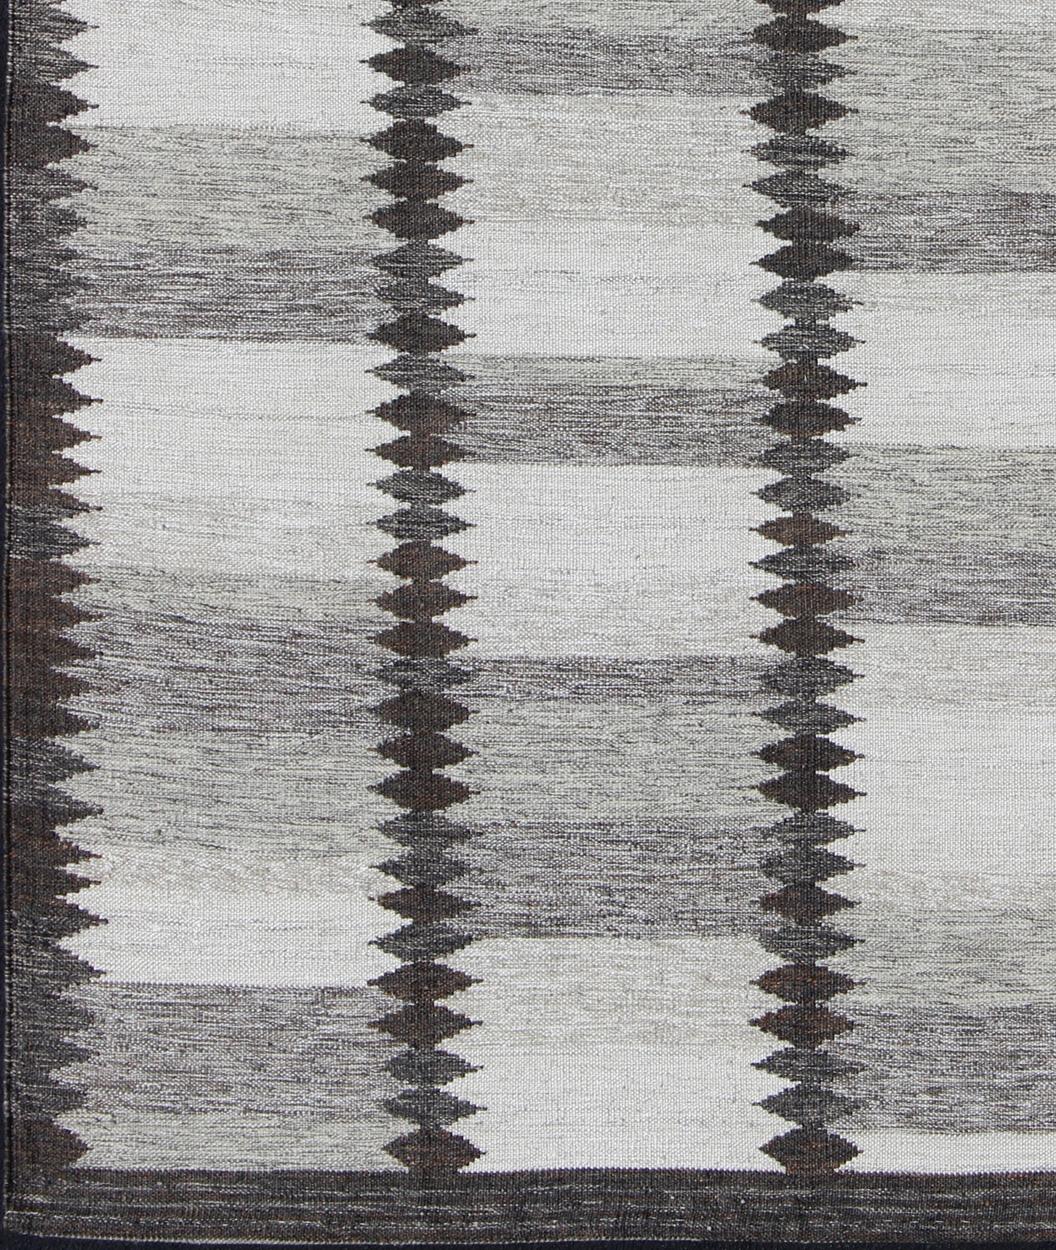 Modern Scandinavian flat-weave rug with geometric stripe design in gray, Keivan Woven Arts rug khn-503-sw-06, country of origin / type: India / Scandinavian flat-weave

This Scandinavian flat-weave is inspired by the work of Swedish textile